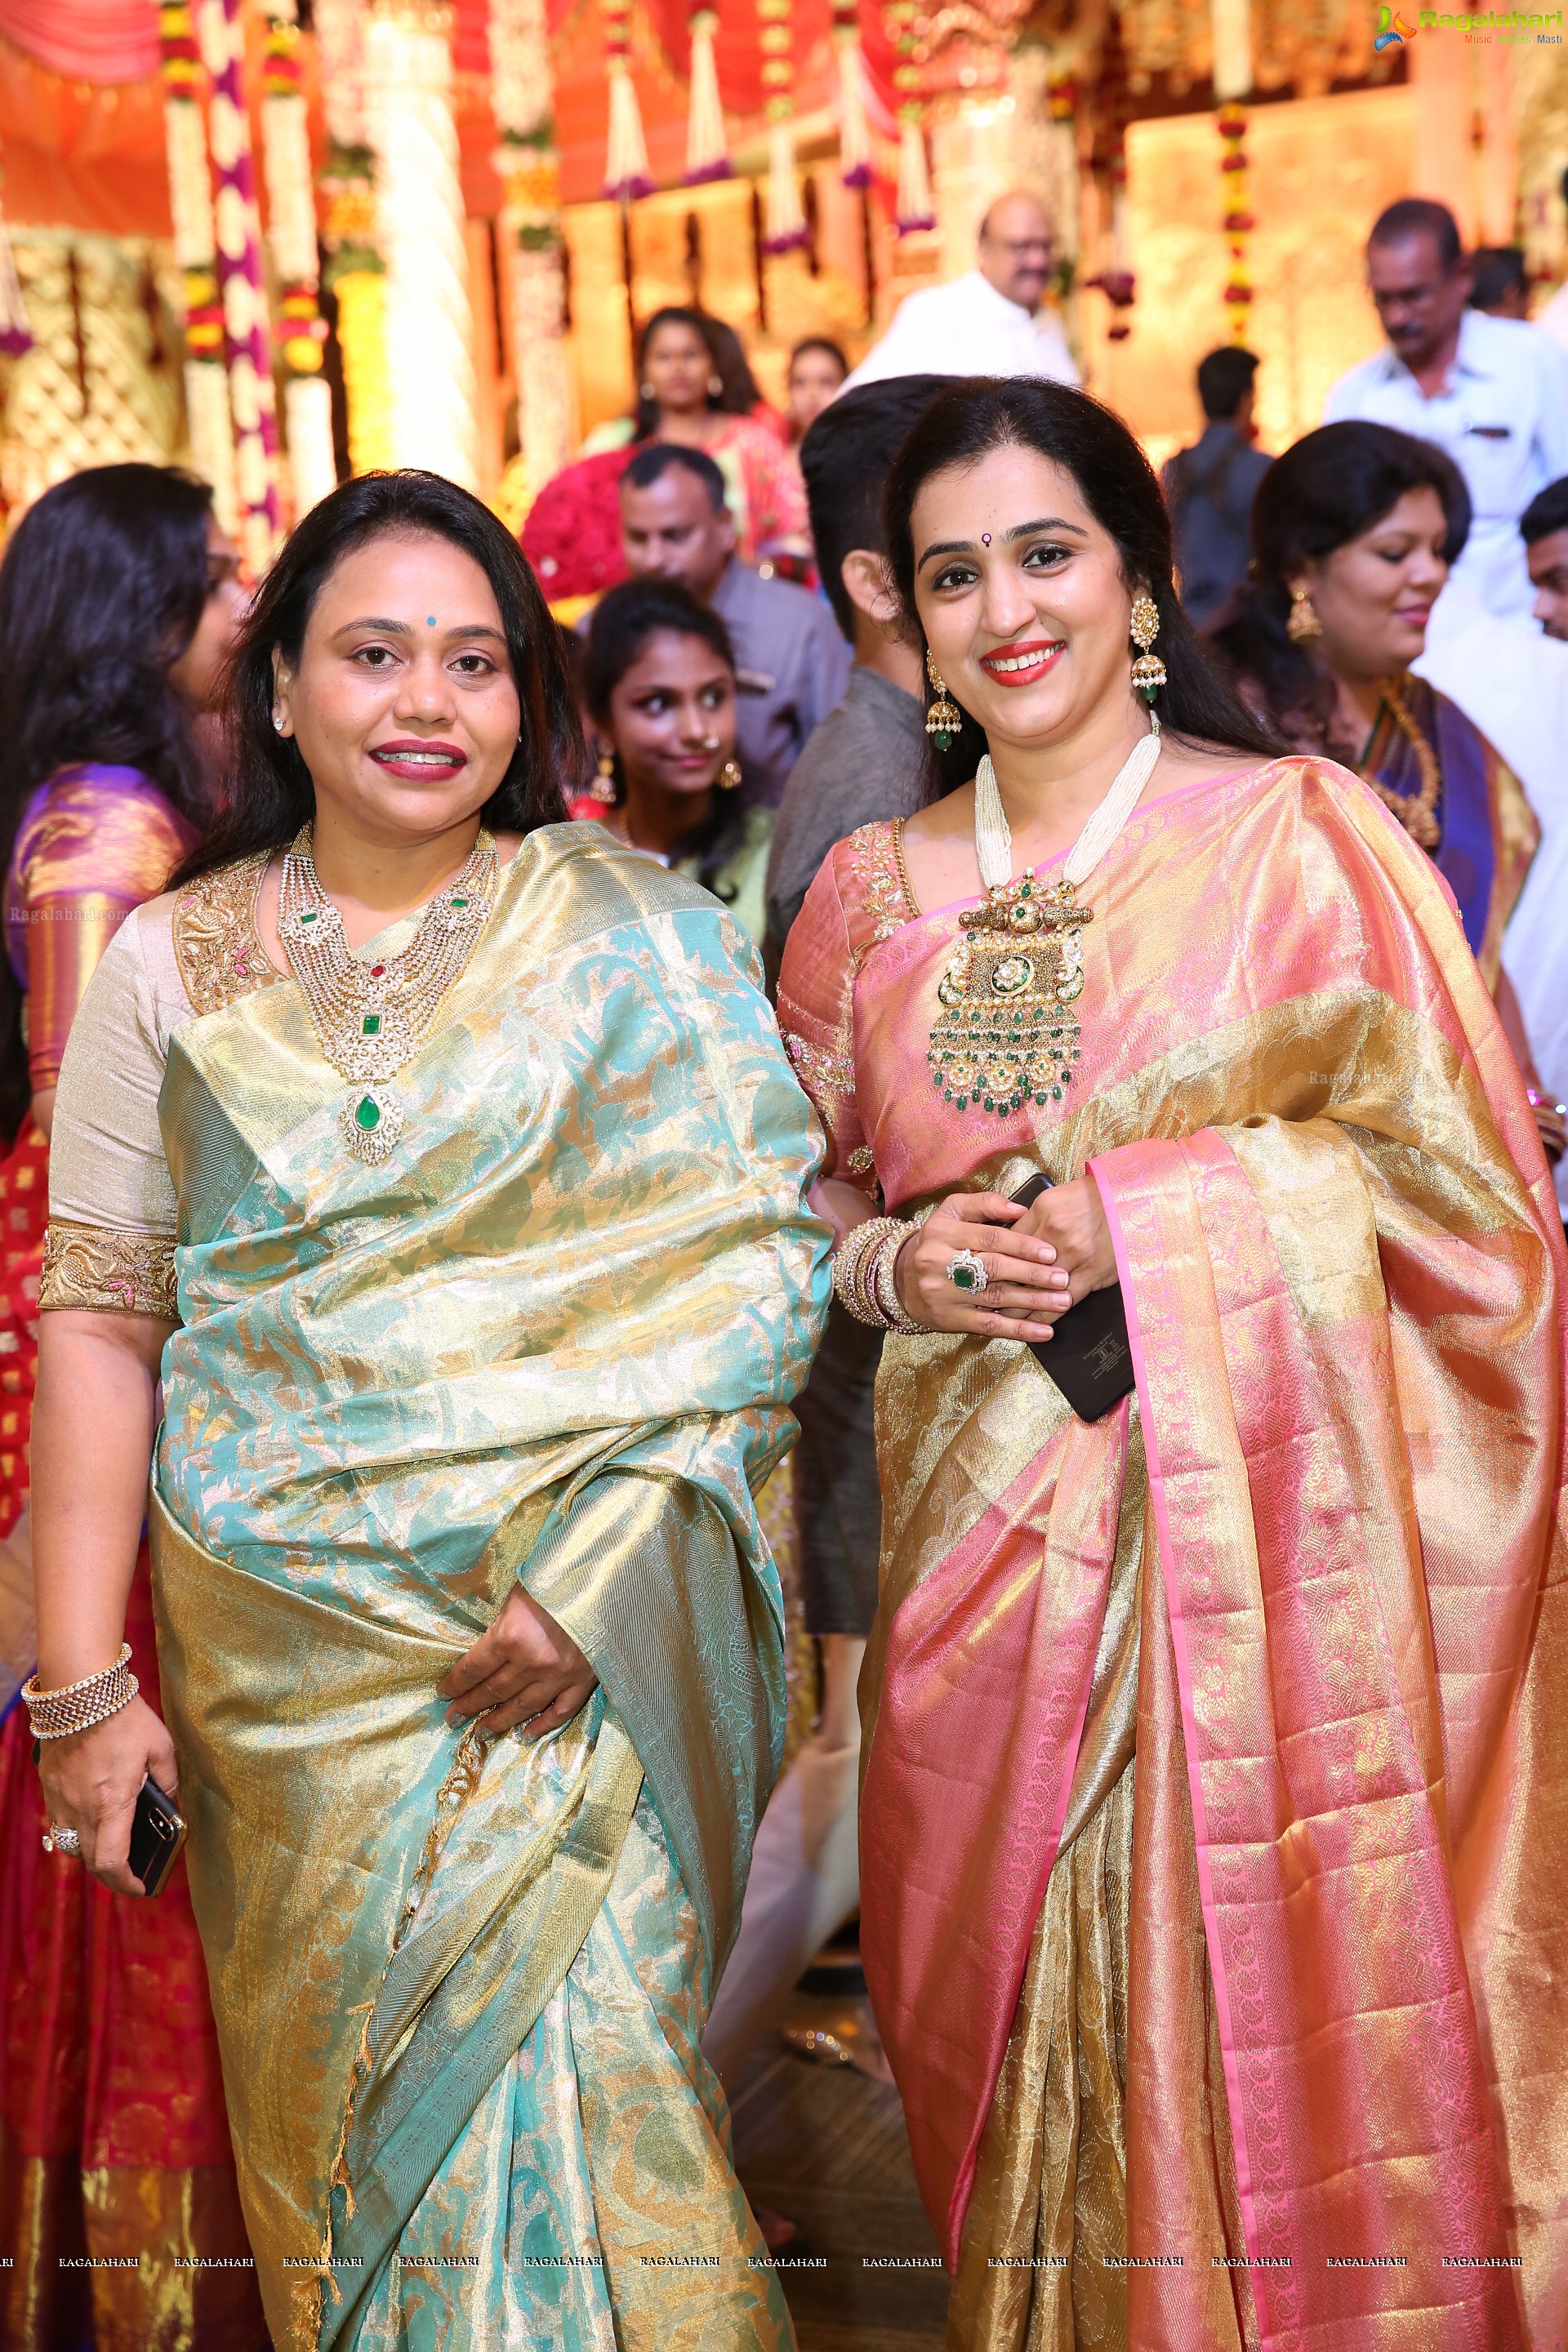 Bandla Ganesh Brother's Daughter Ashritha-Sai Pavan Wedding Ceremony at JRC Convention